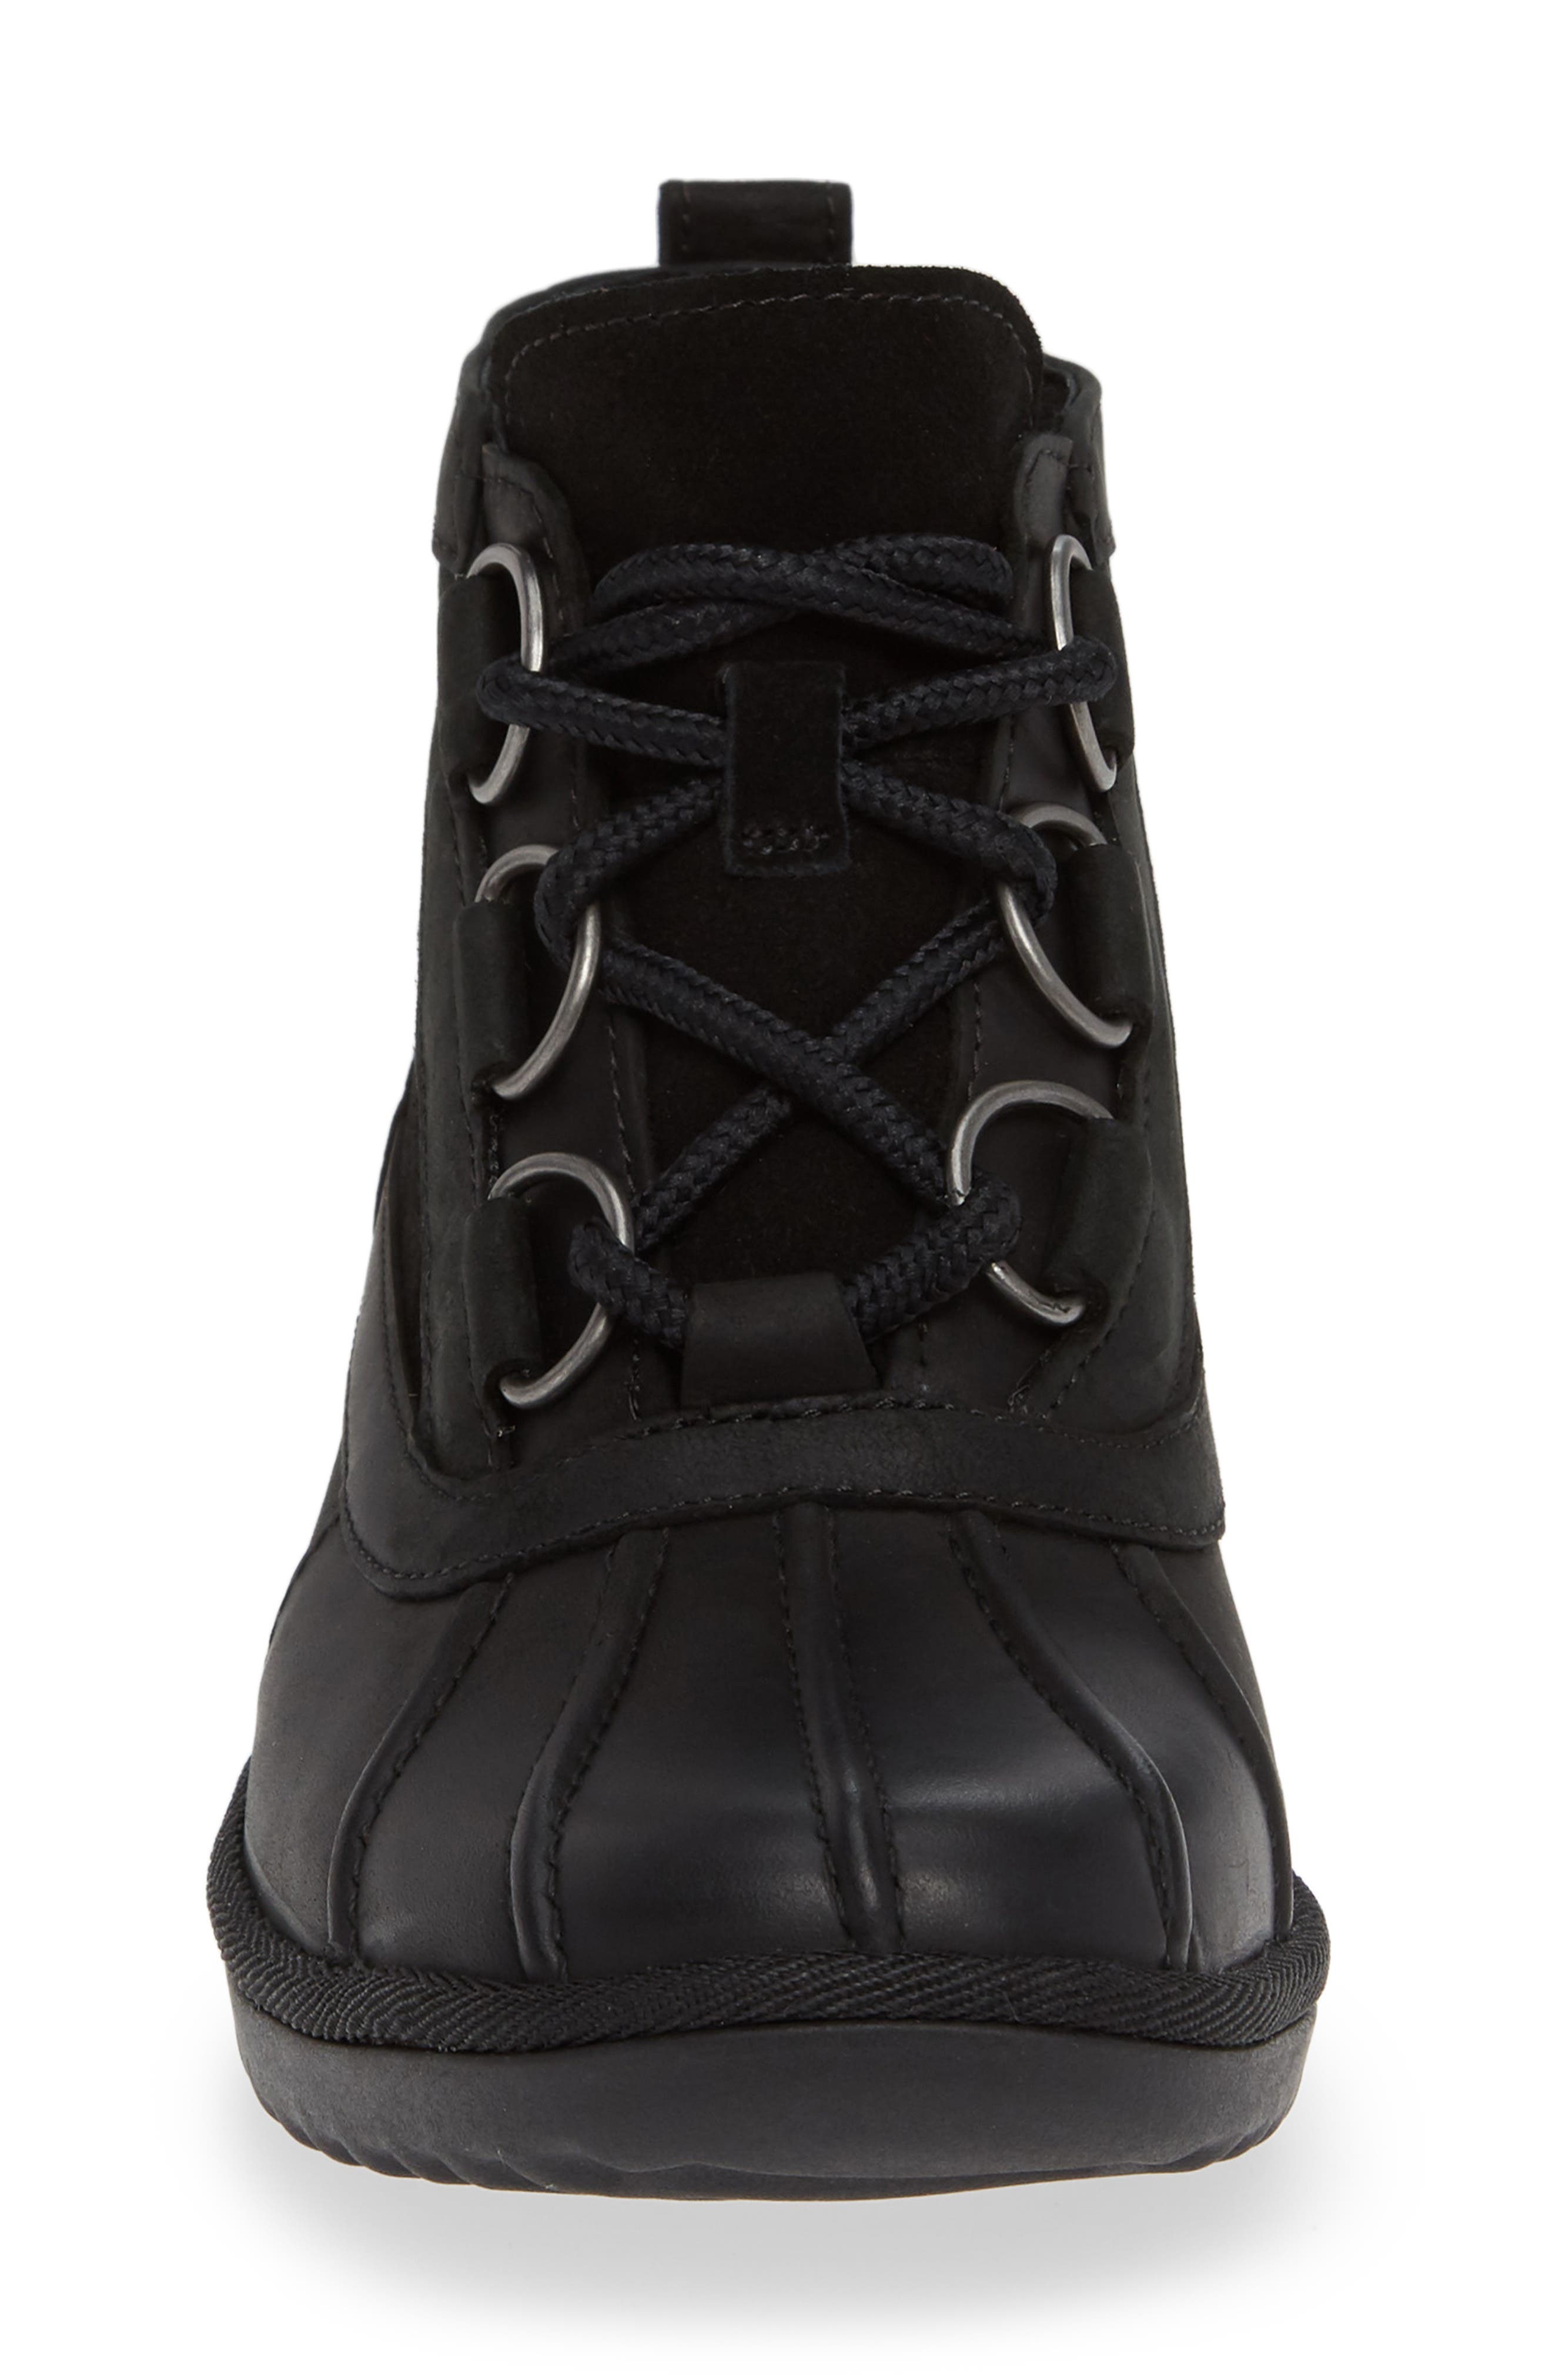 ugg heather boot black